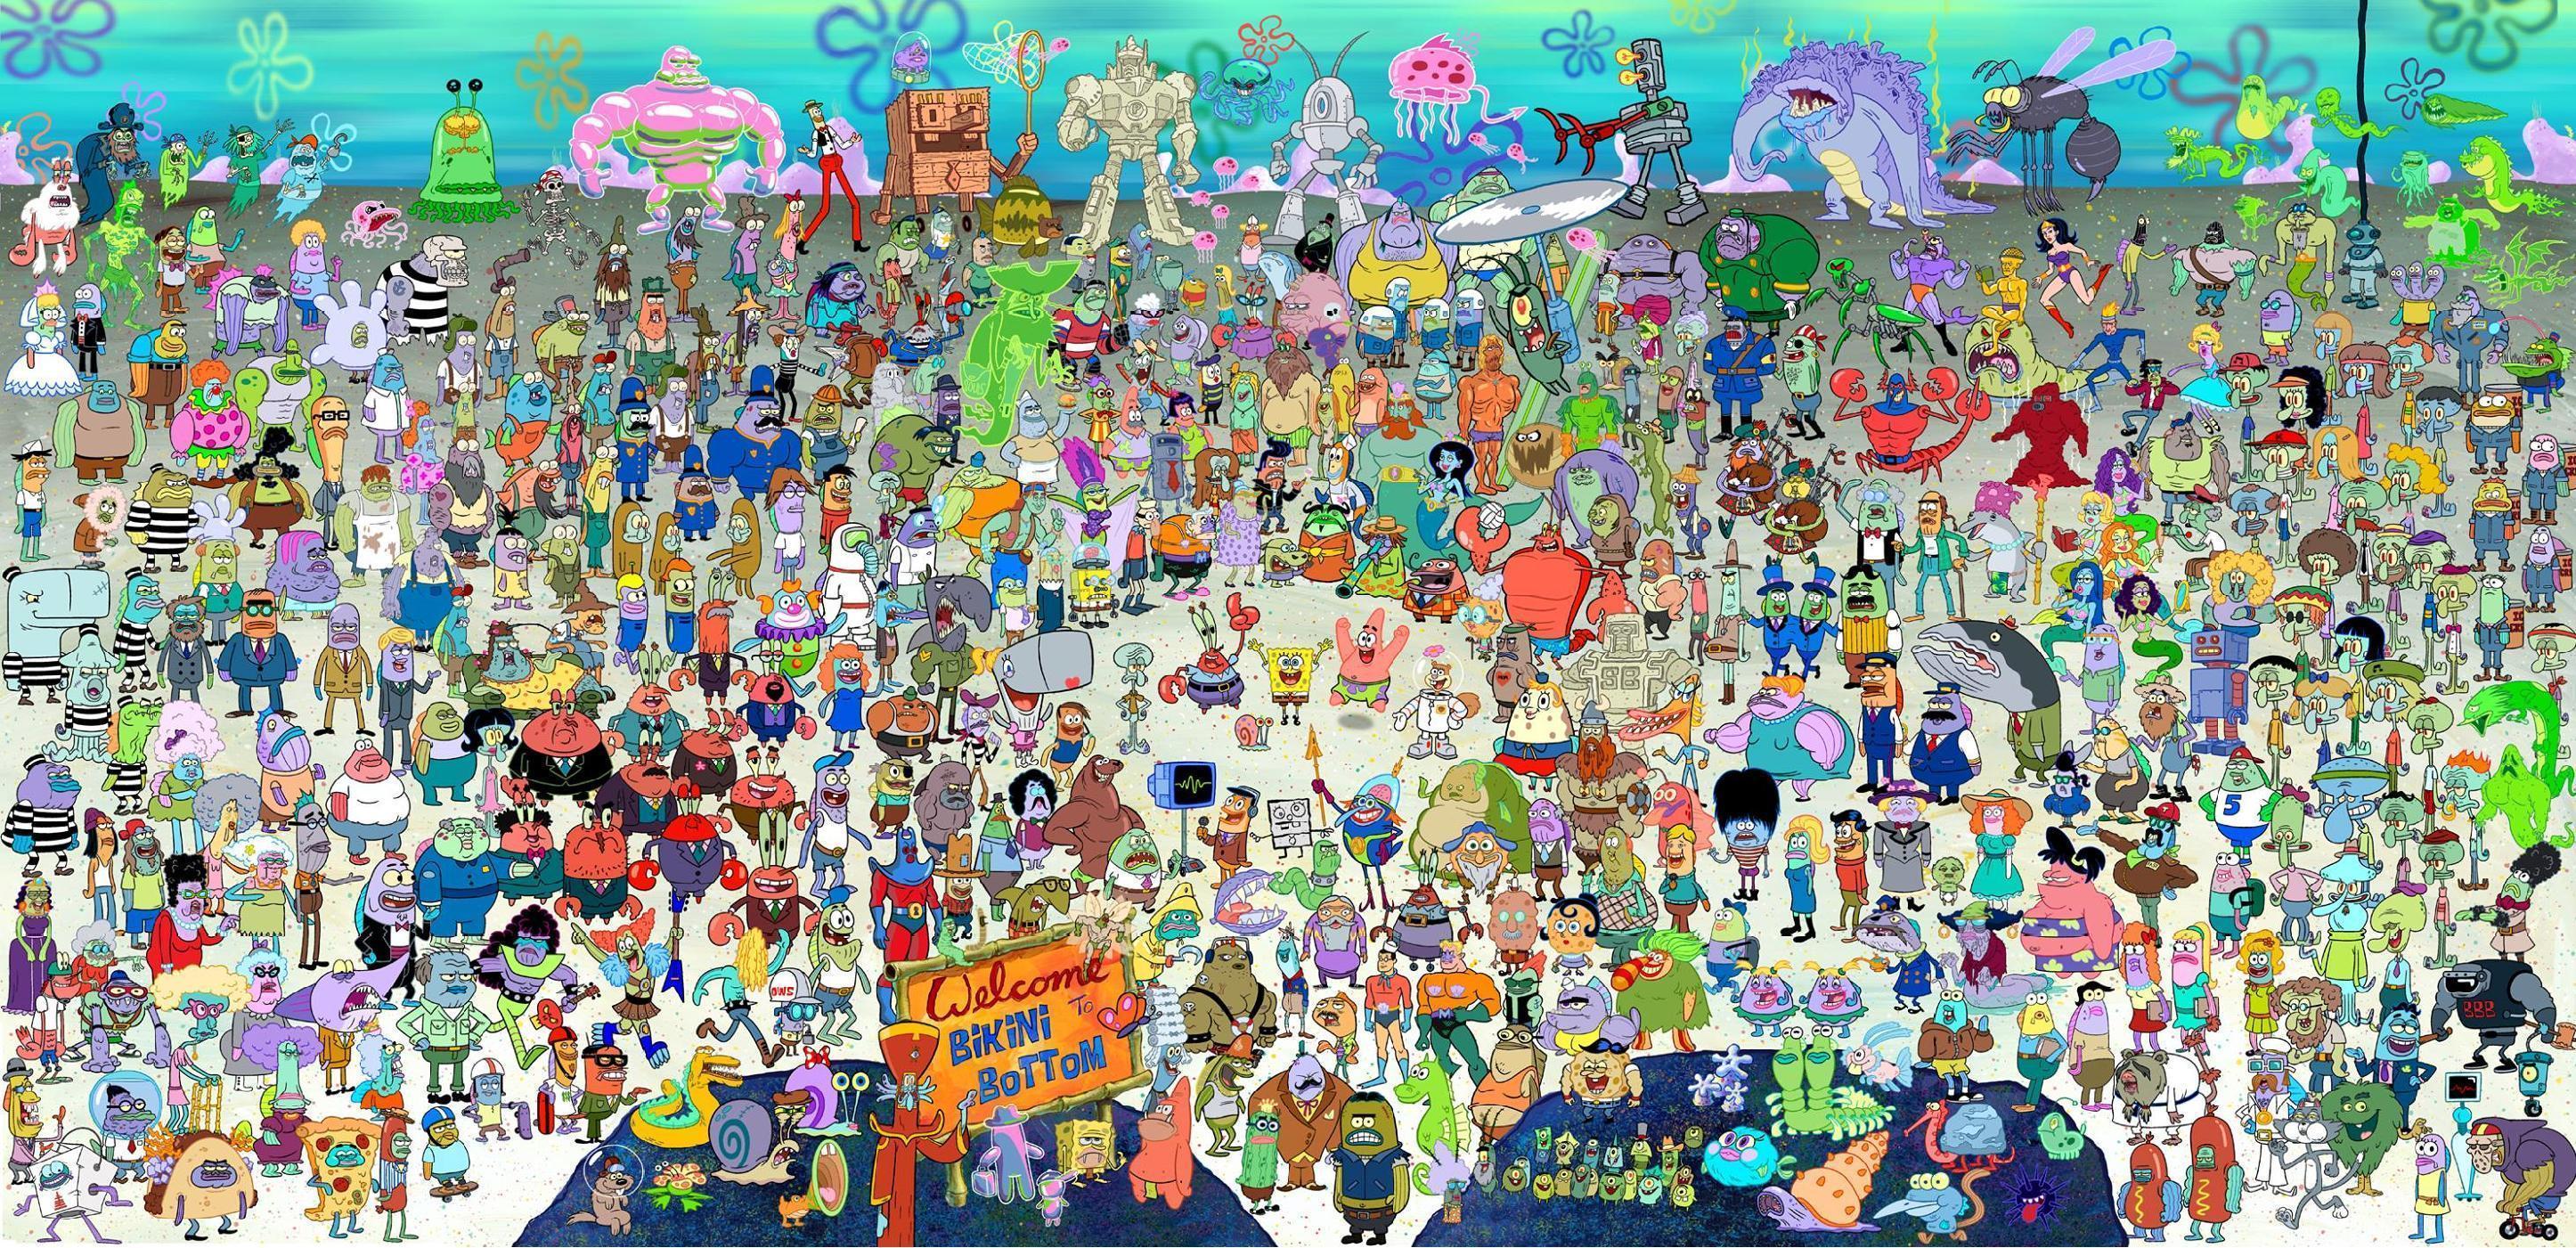 Spongebob Widescreen Background Wallpaper [276] Wallpaper